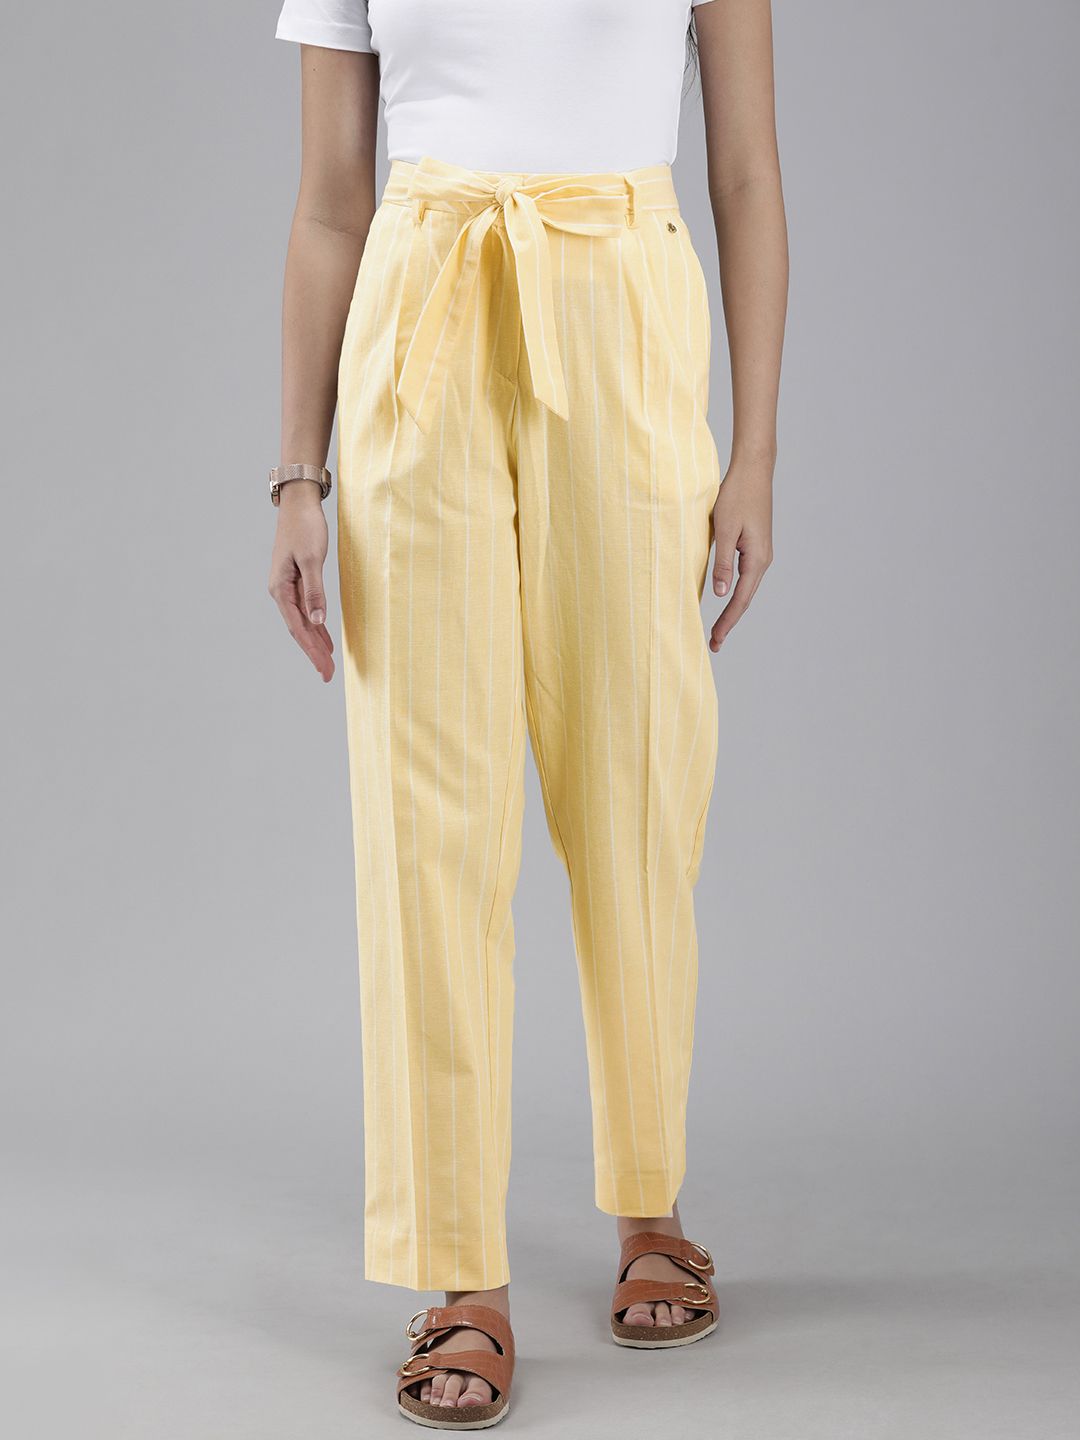 Van Heusen Woman Women Yellow & White Striped Trousers Price in India